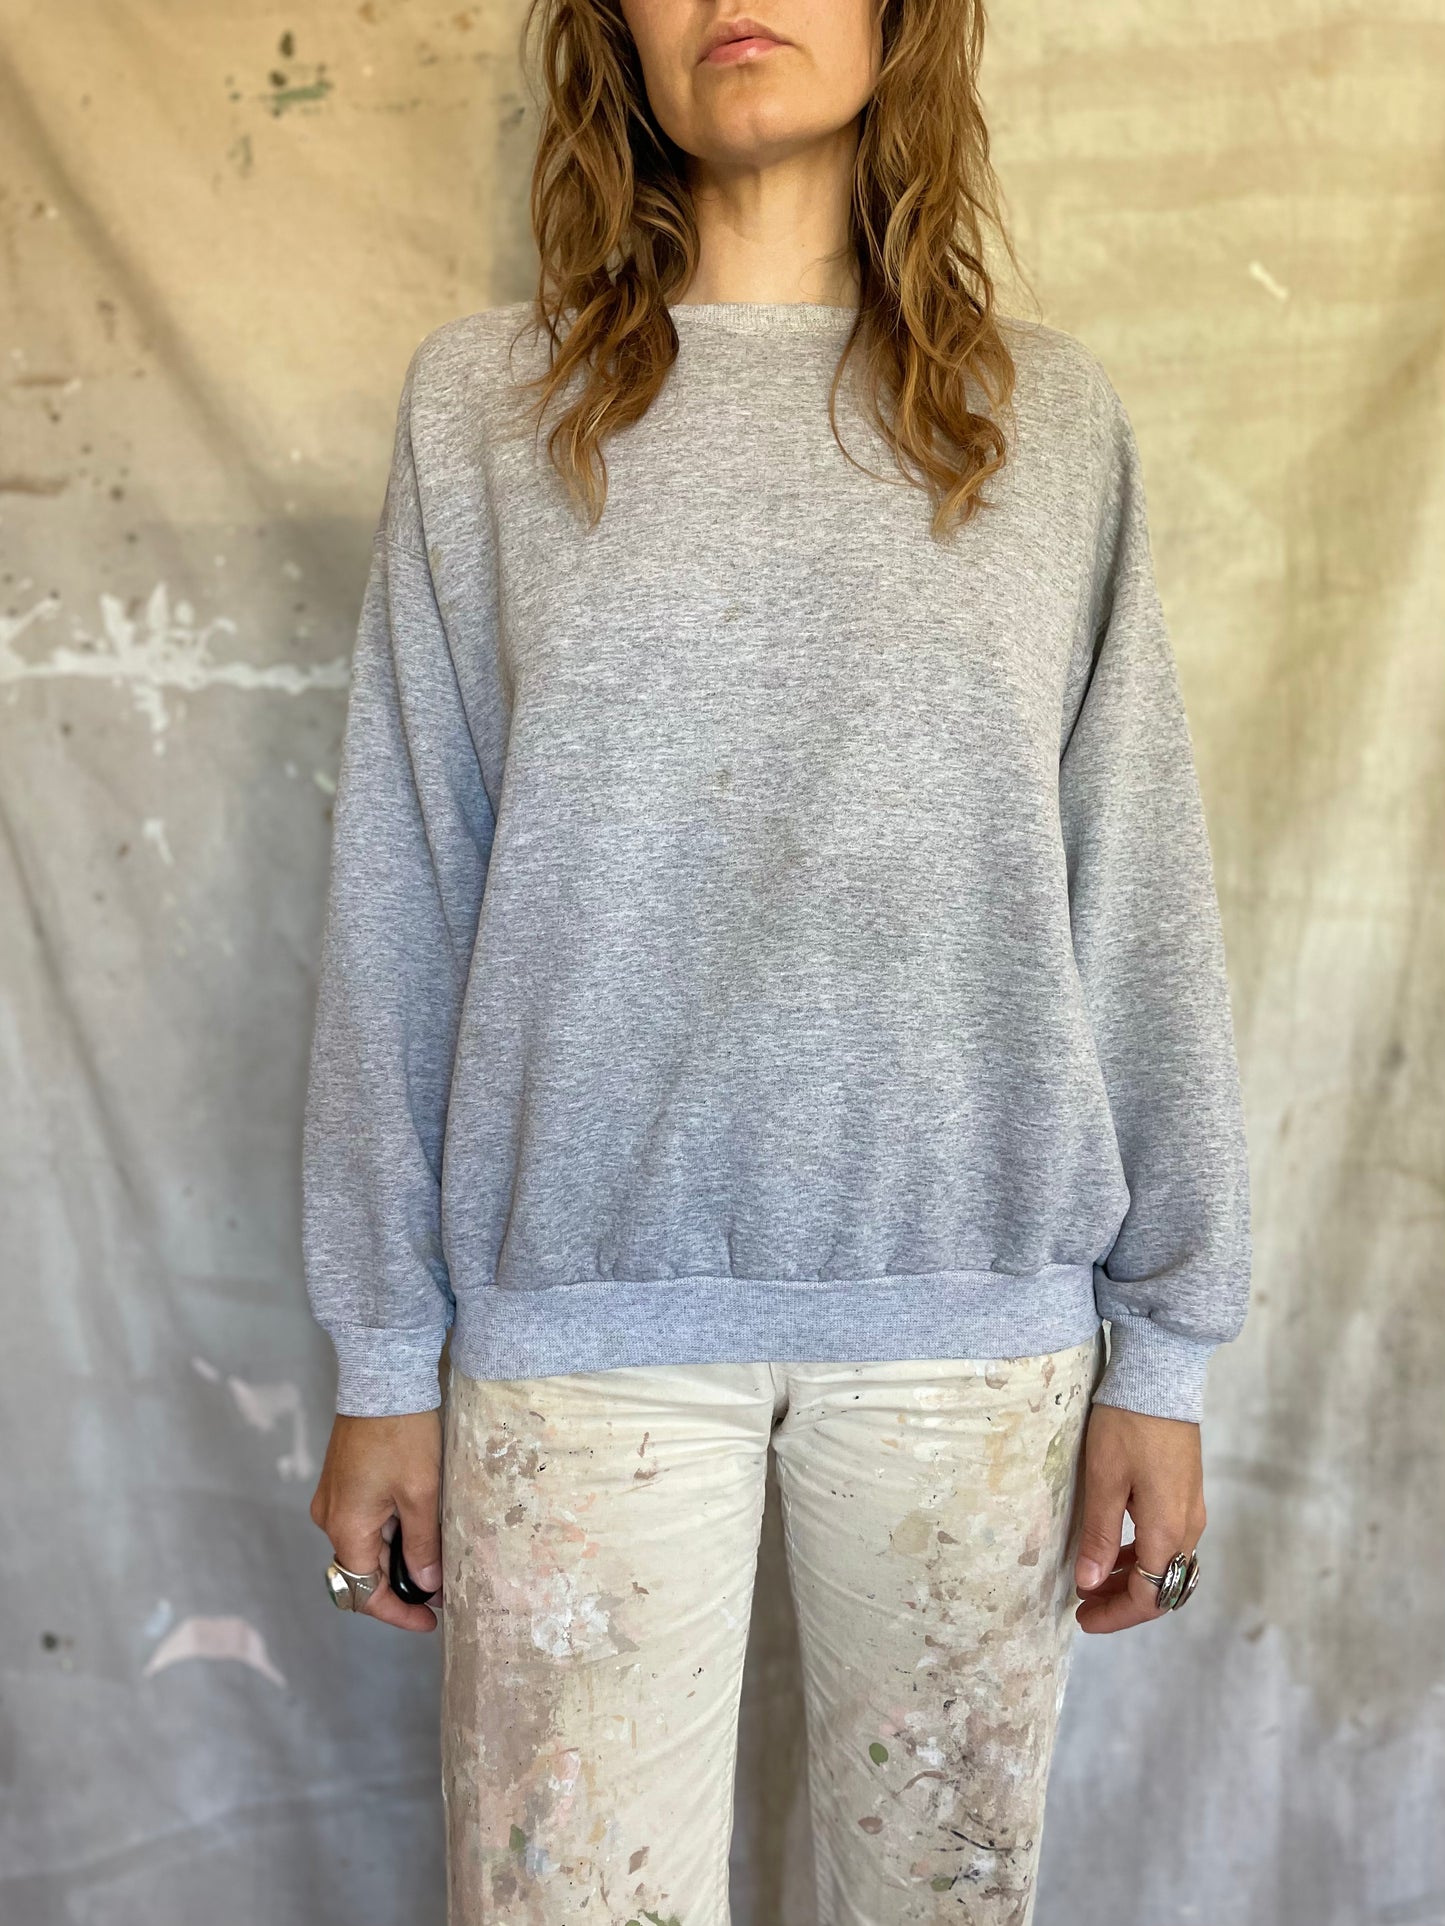 90s Blank Heather Gray Sweatshirt